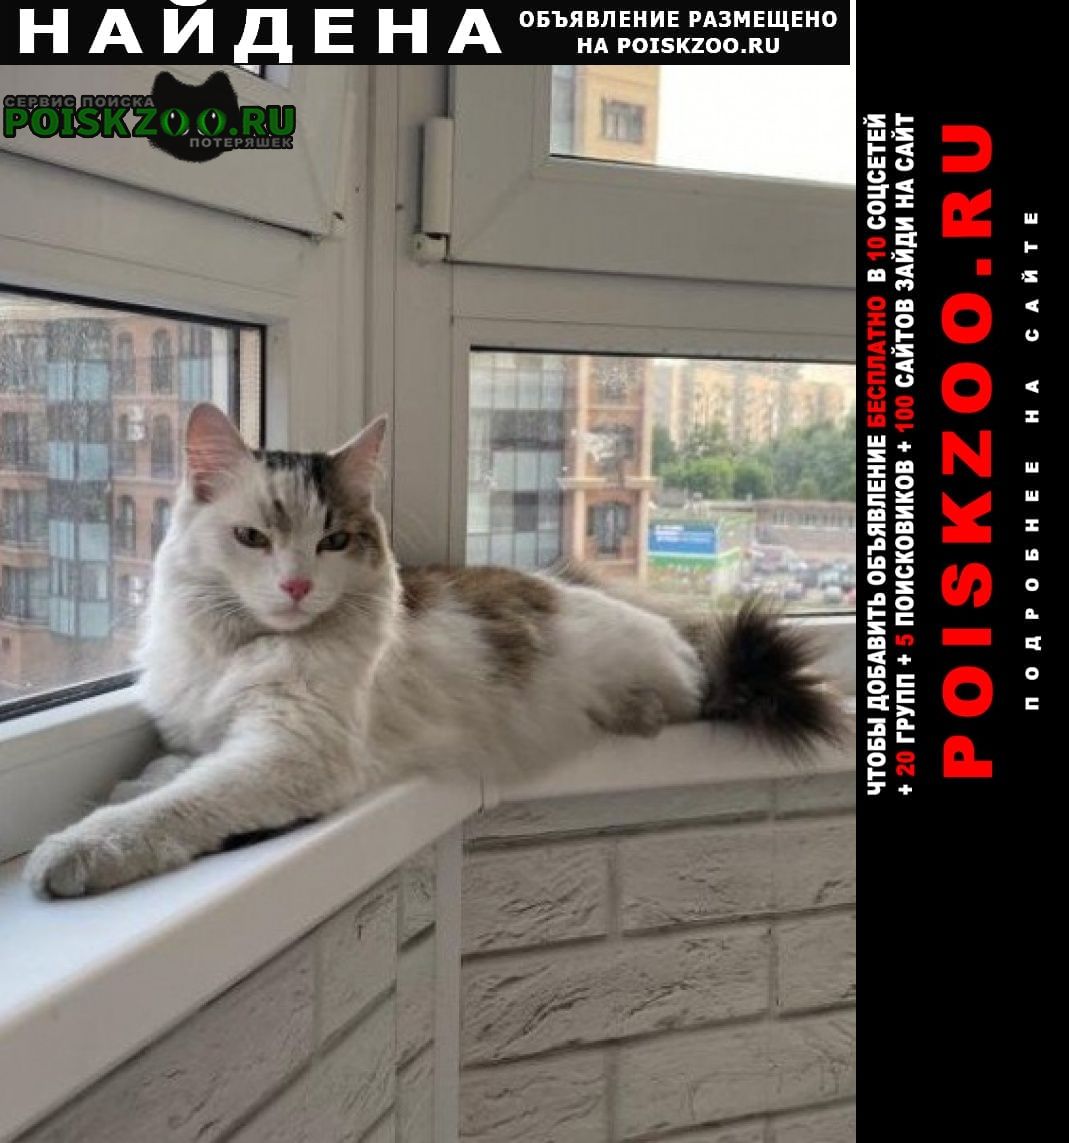 Найдена кошка - дунайский проспект 28 к2 Санкт-Петербург